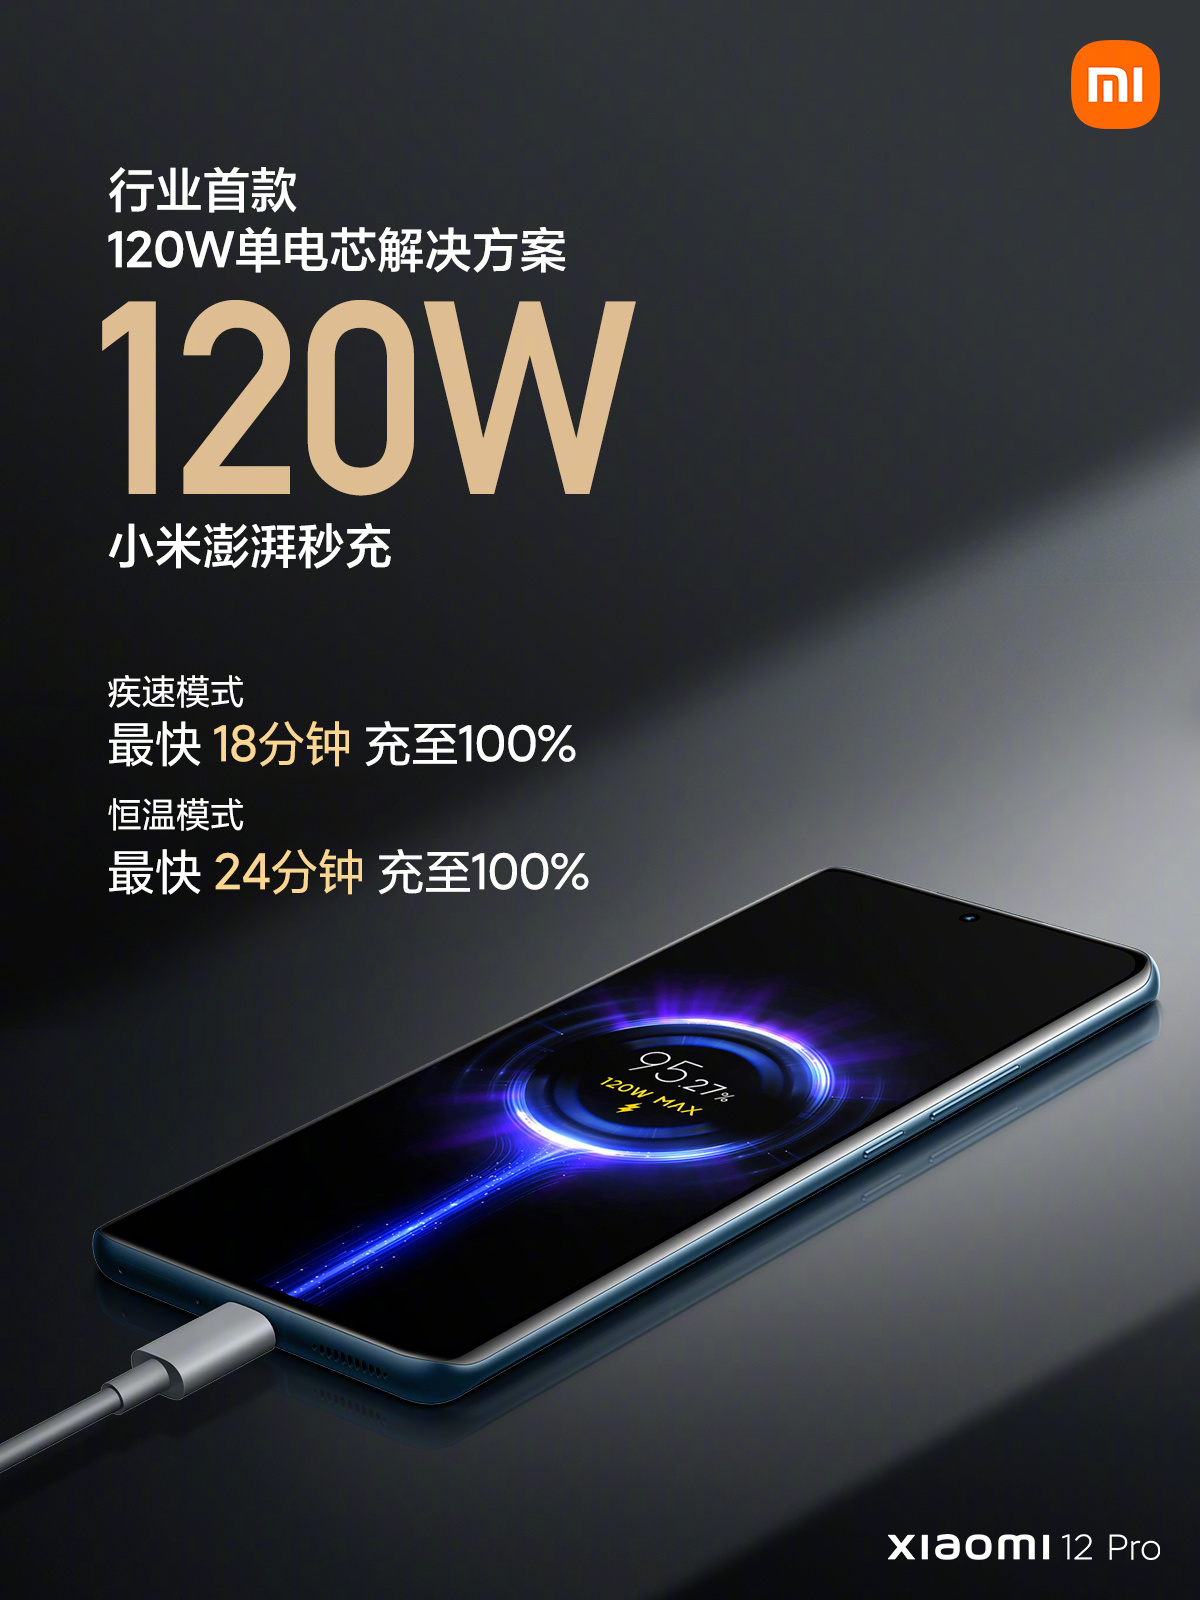 Xiaomi 12 Pro 120W Charge